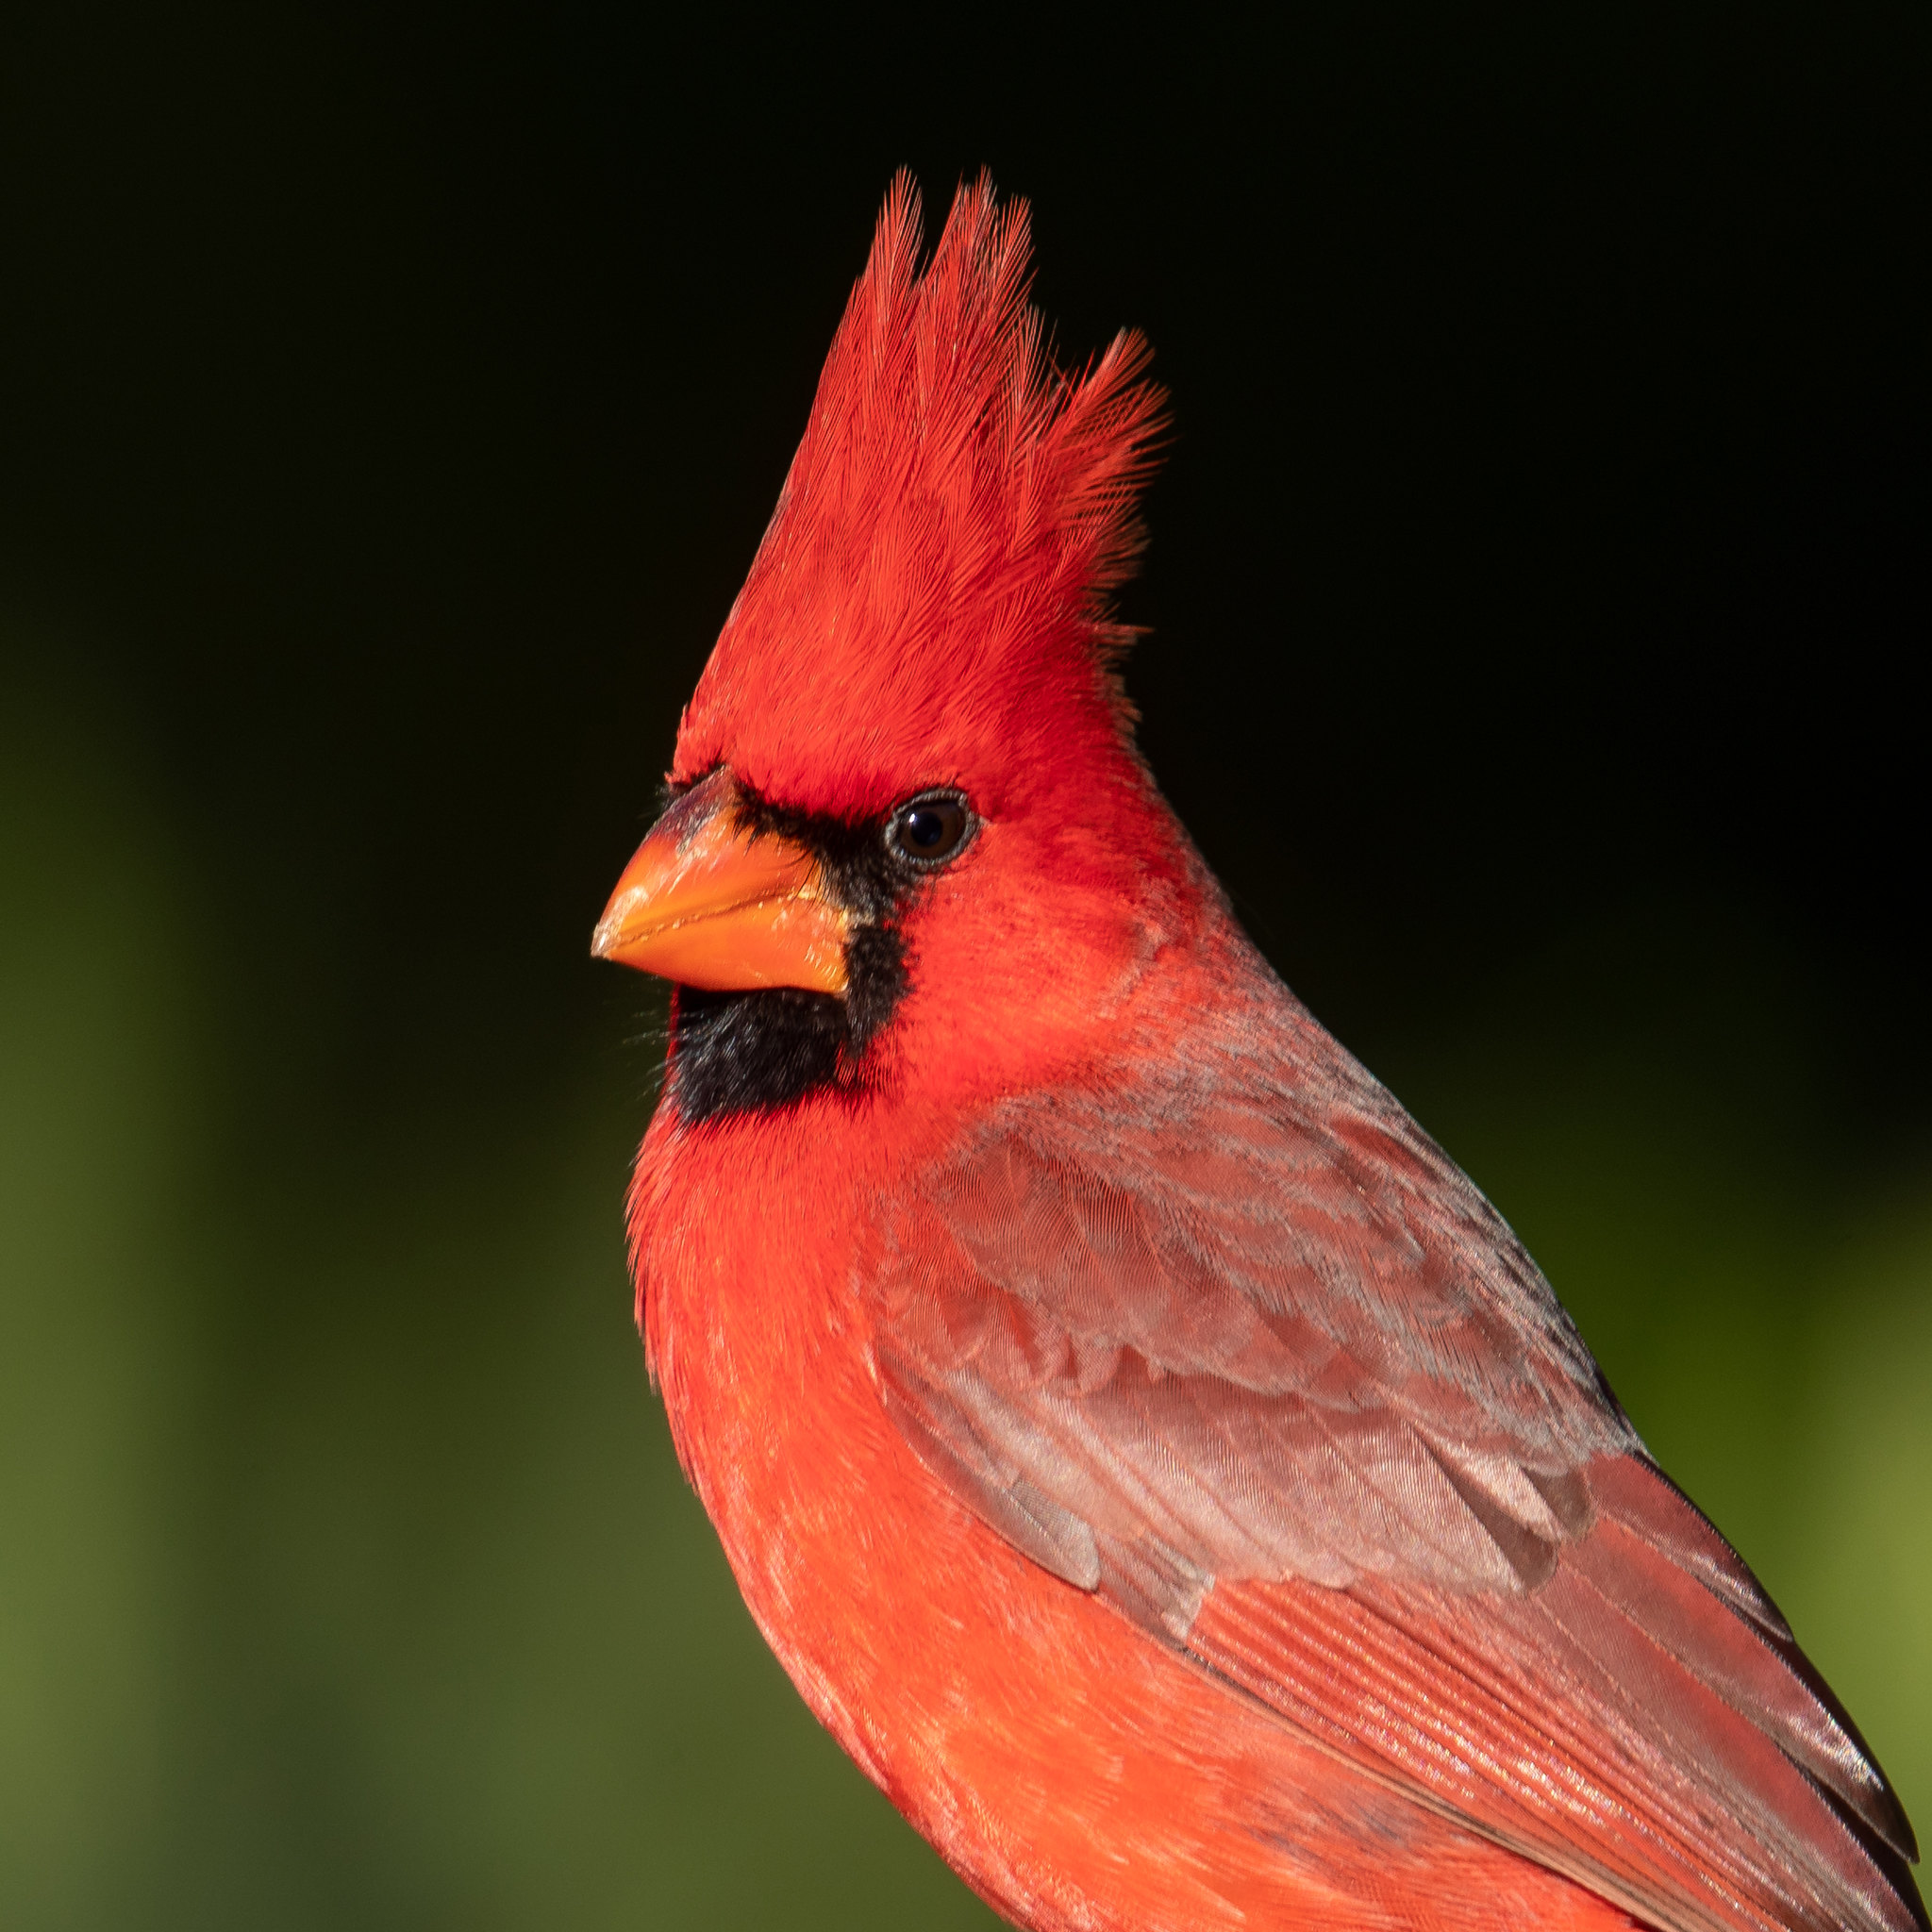 Indiana's State Bird, the Northern cardinal.